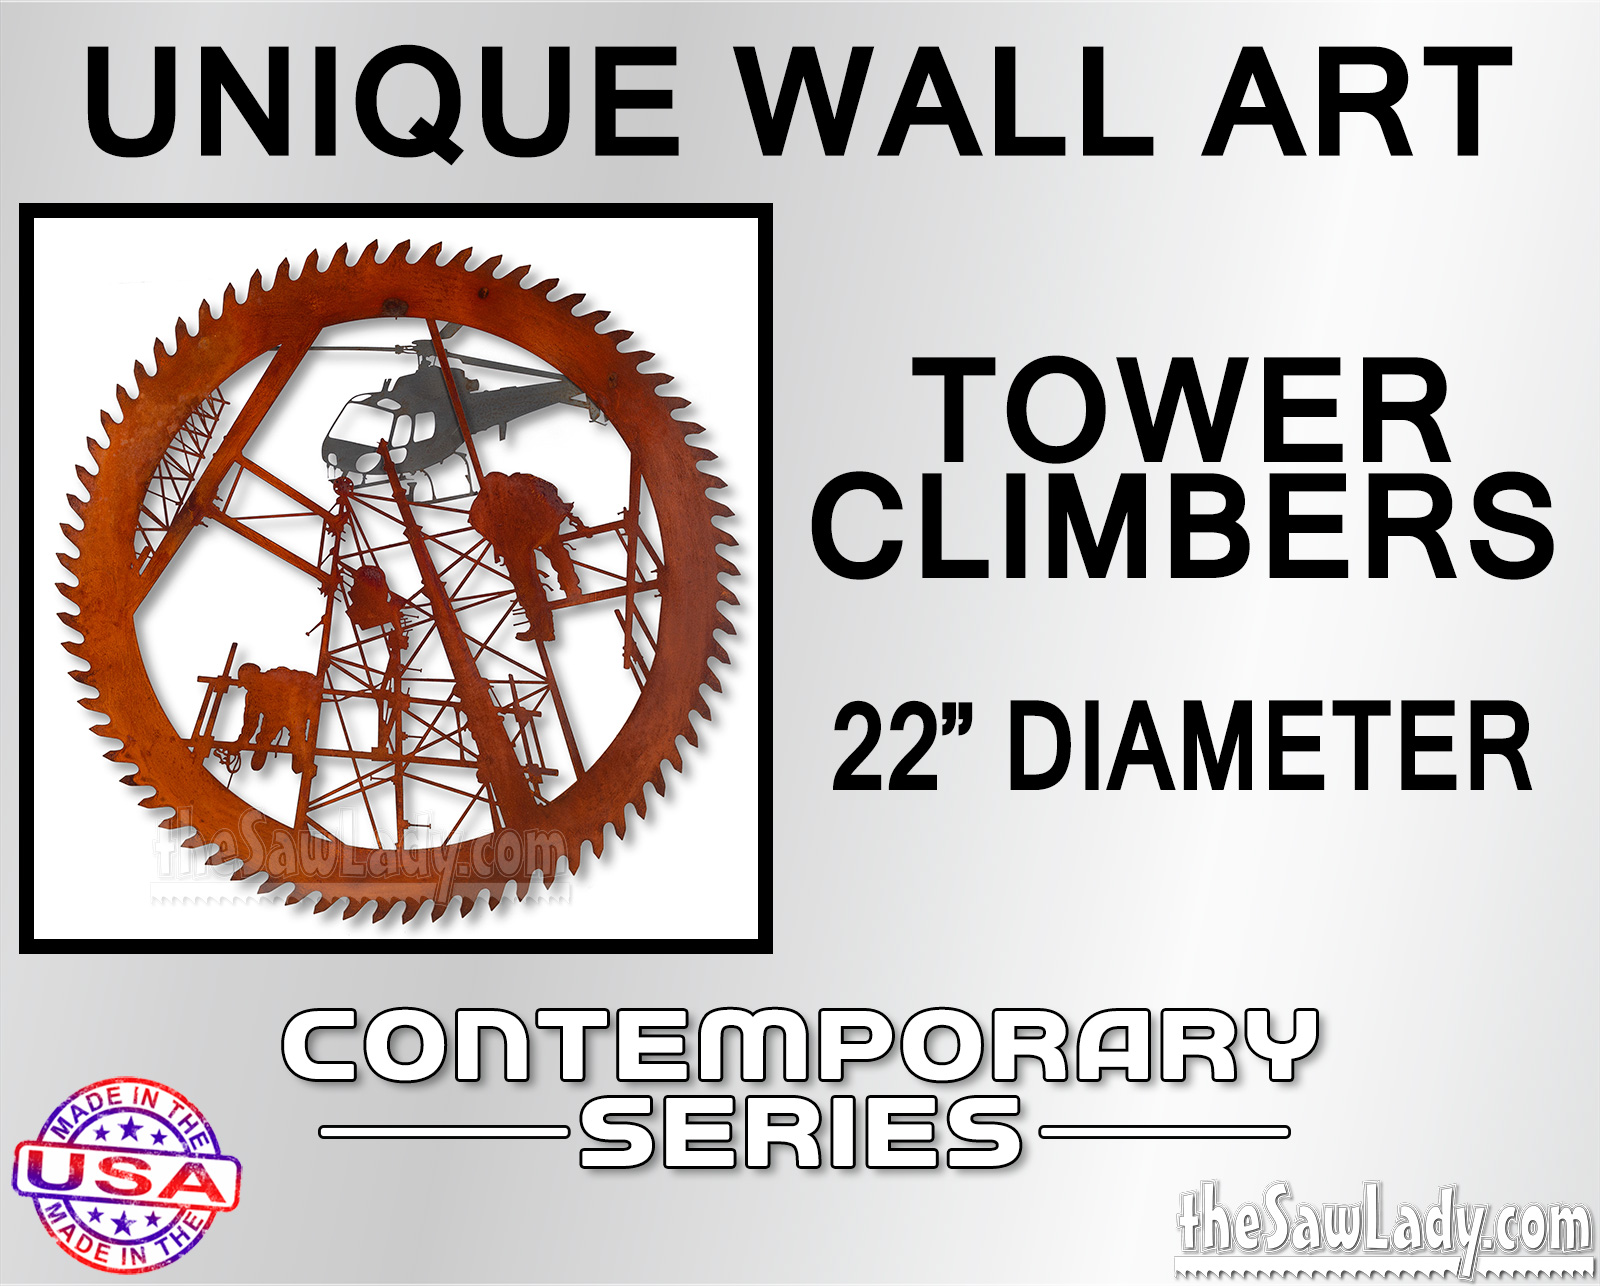 transmission-tower-climbers metal wall saw art